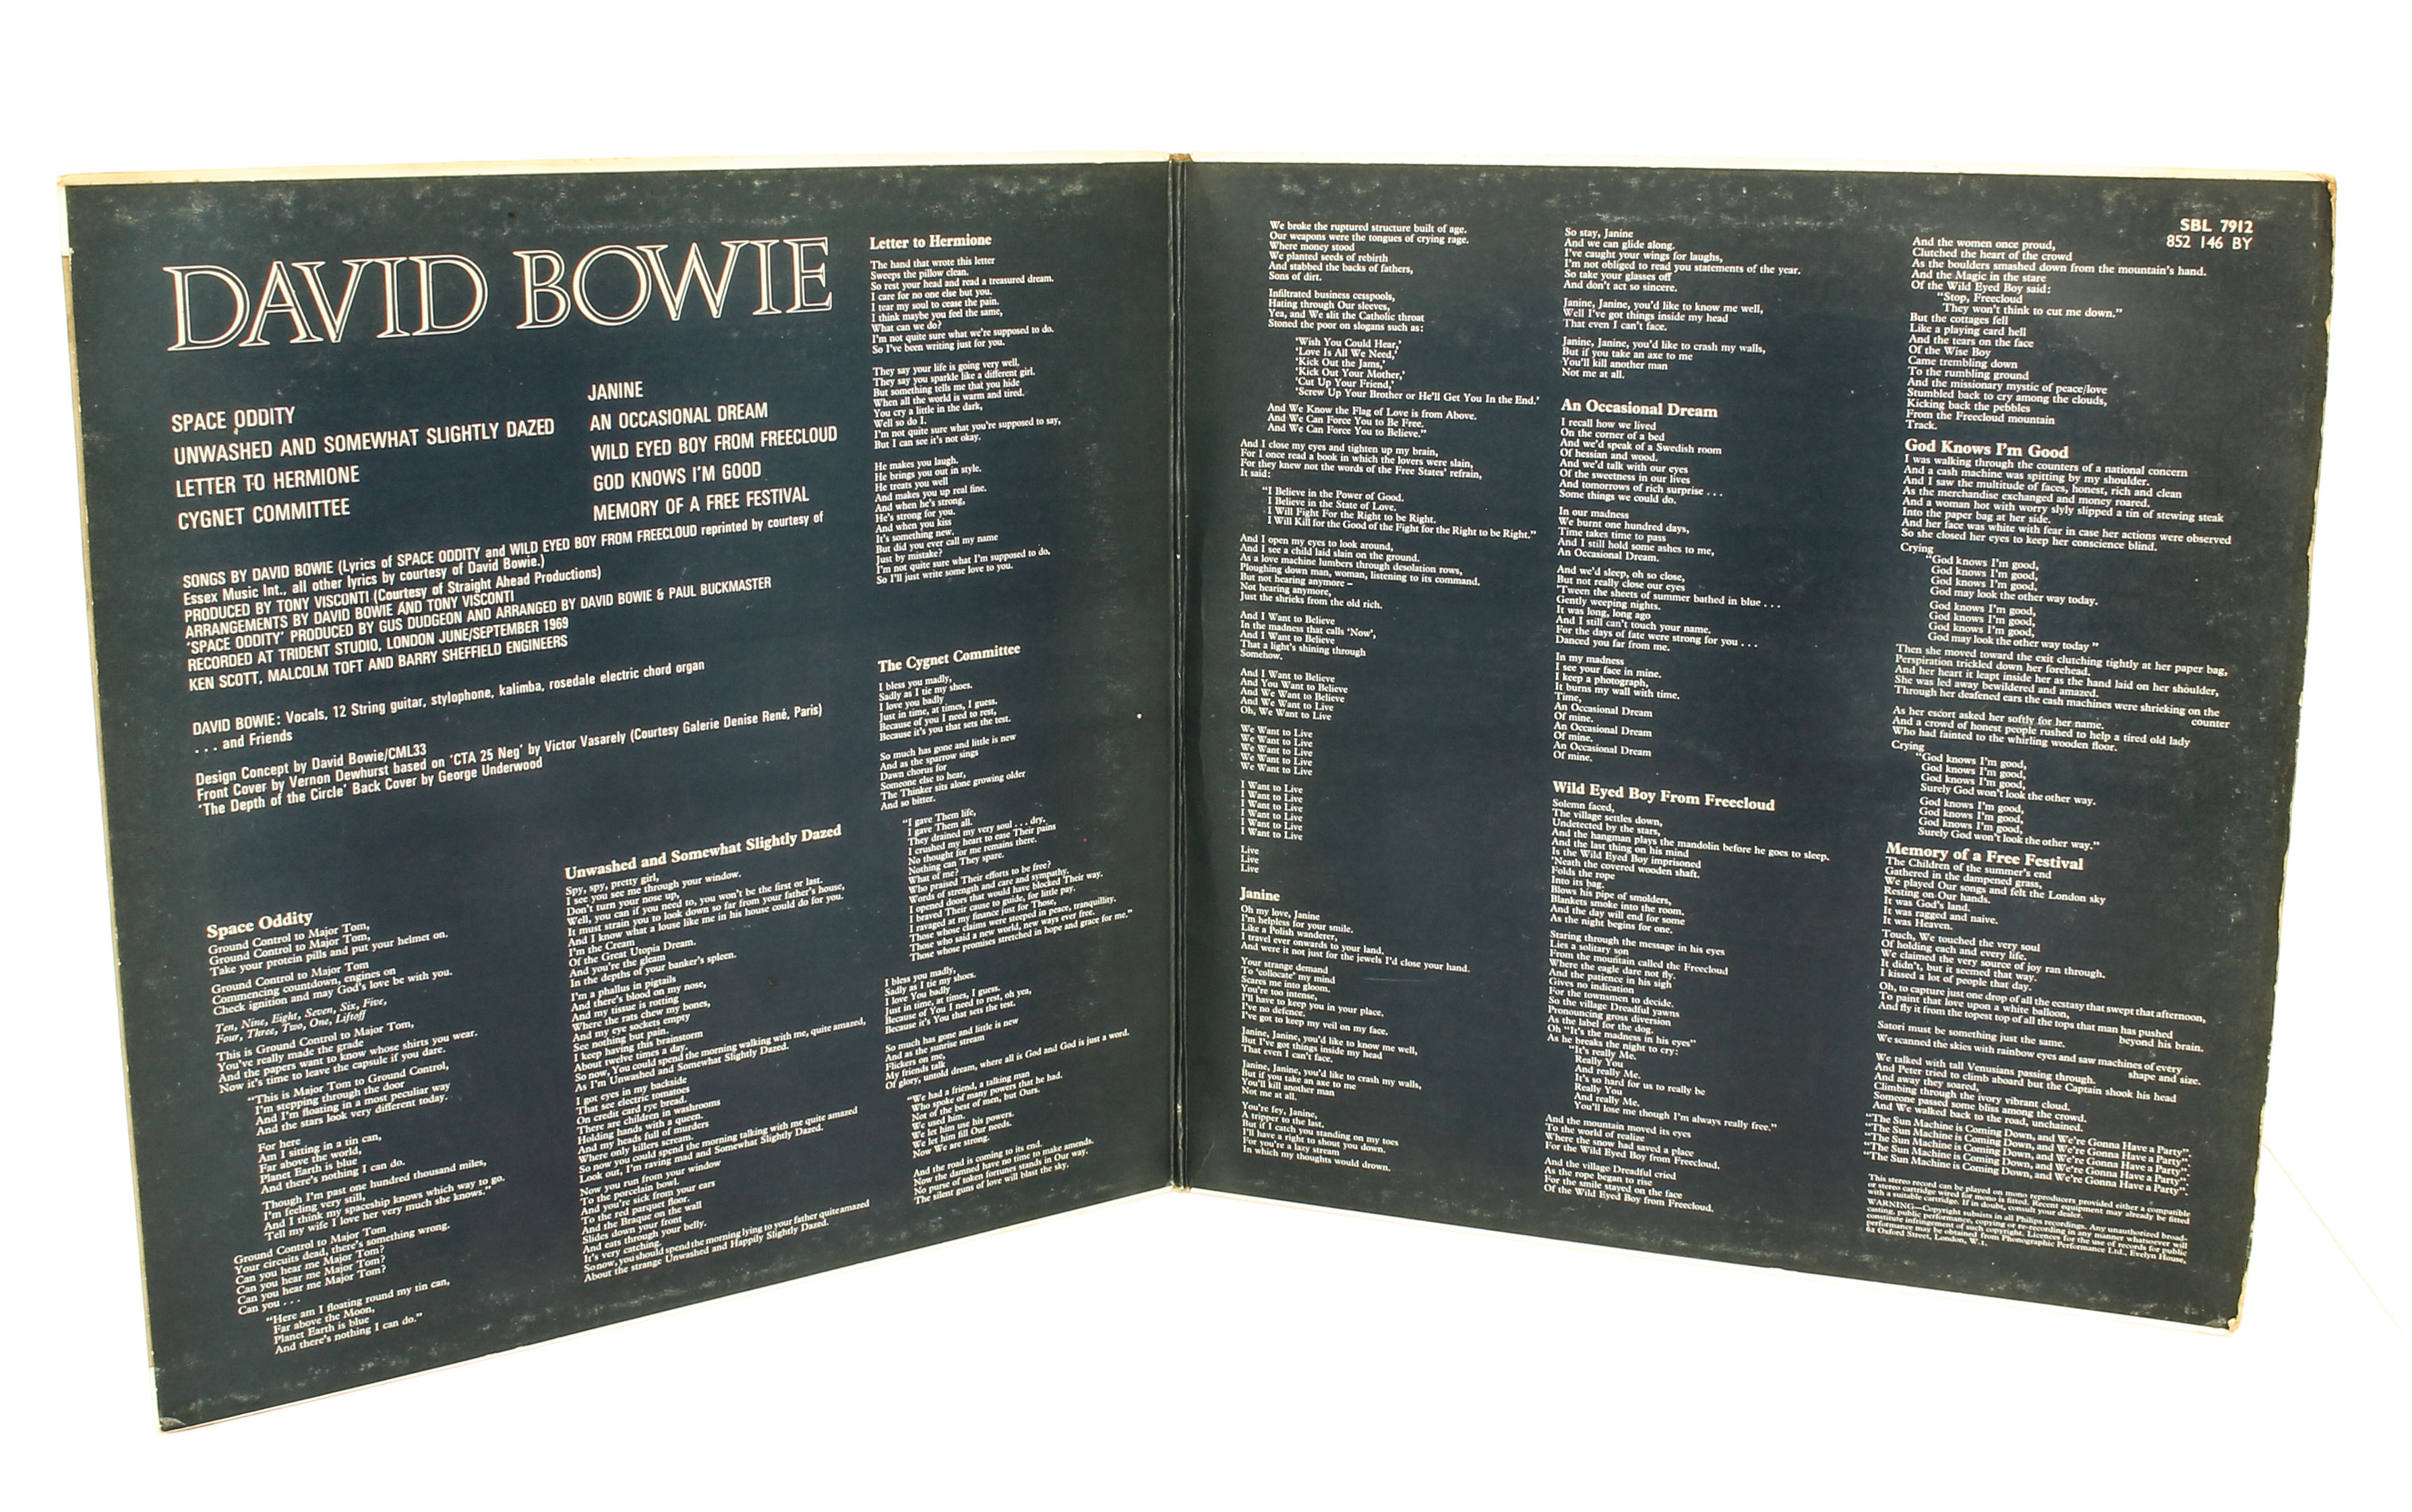 Vinyl - David Bowie - David Bowie. Original UK 1969 1st UK pressing album with gatefold sleeve, - Image 3 of 5